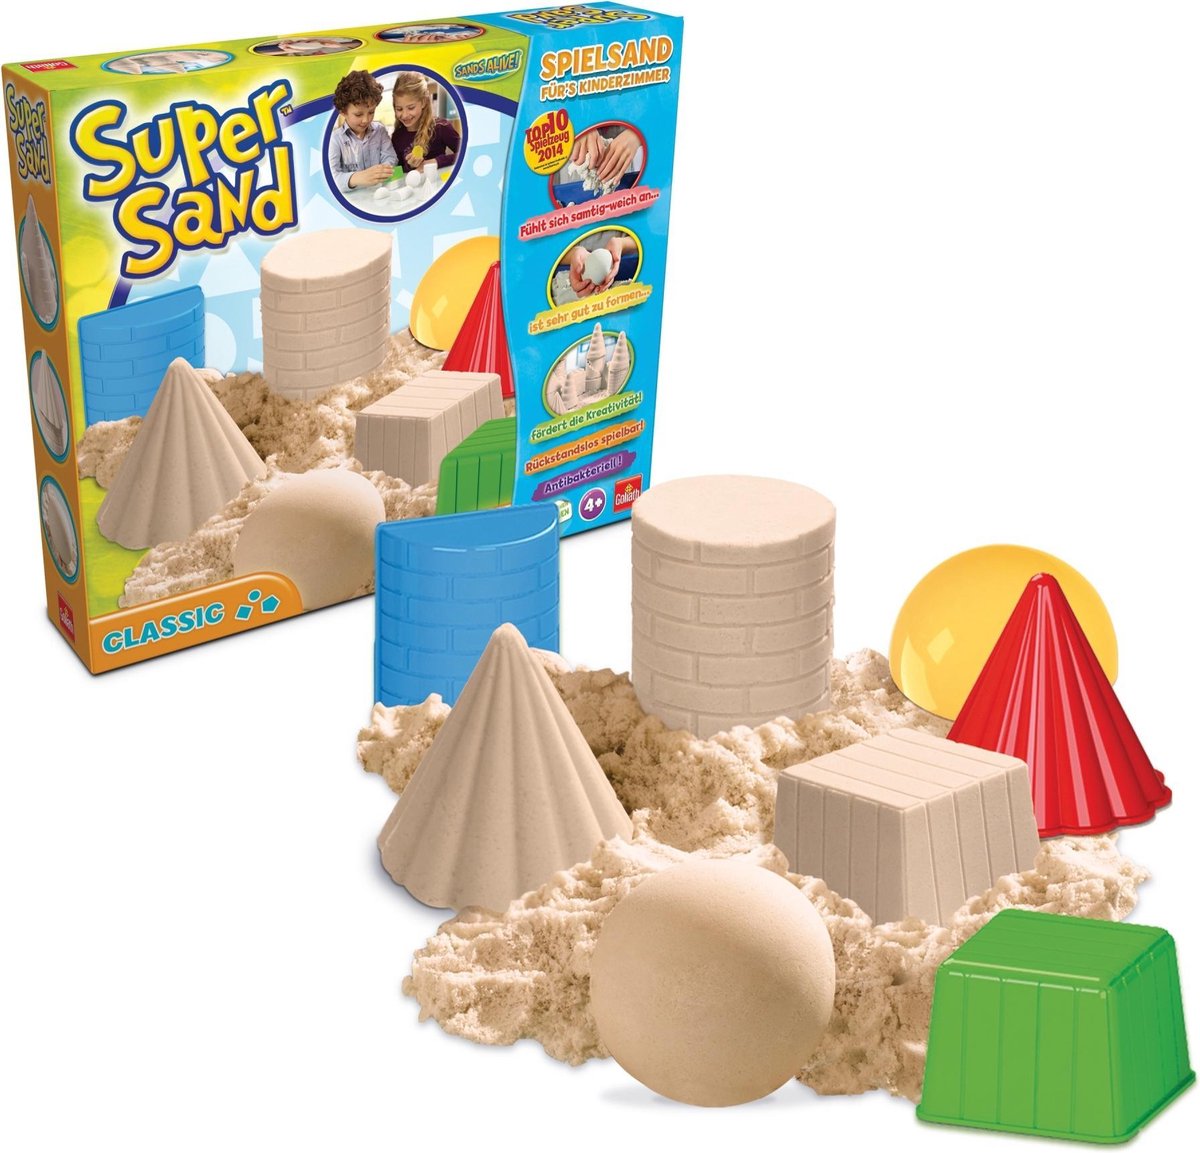 Super Sand Classic - Speelzand - 450 gr Zand